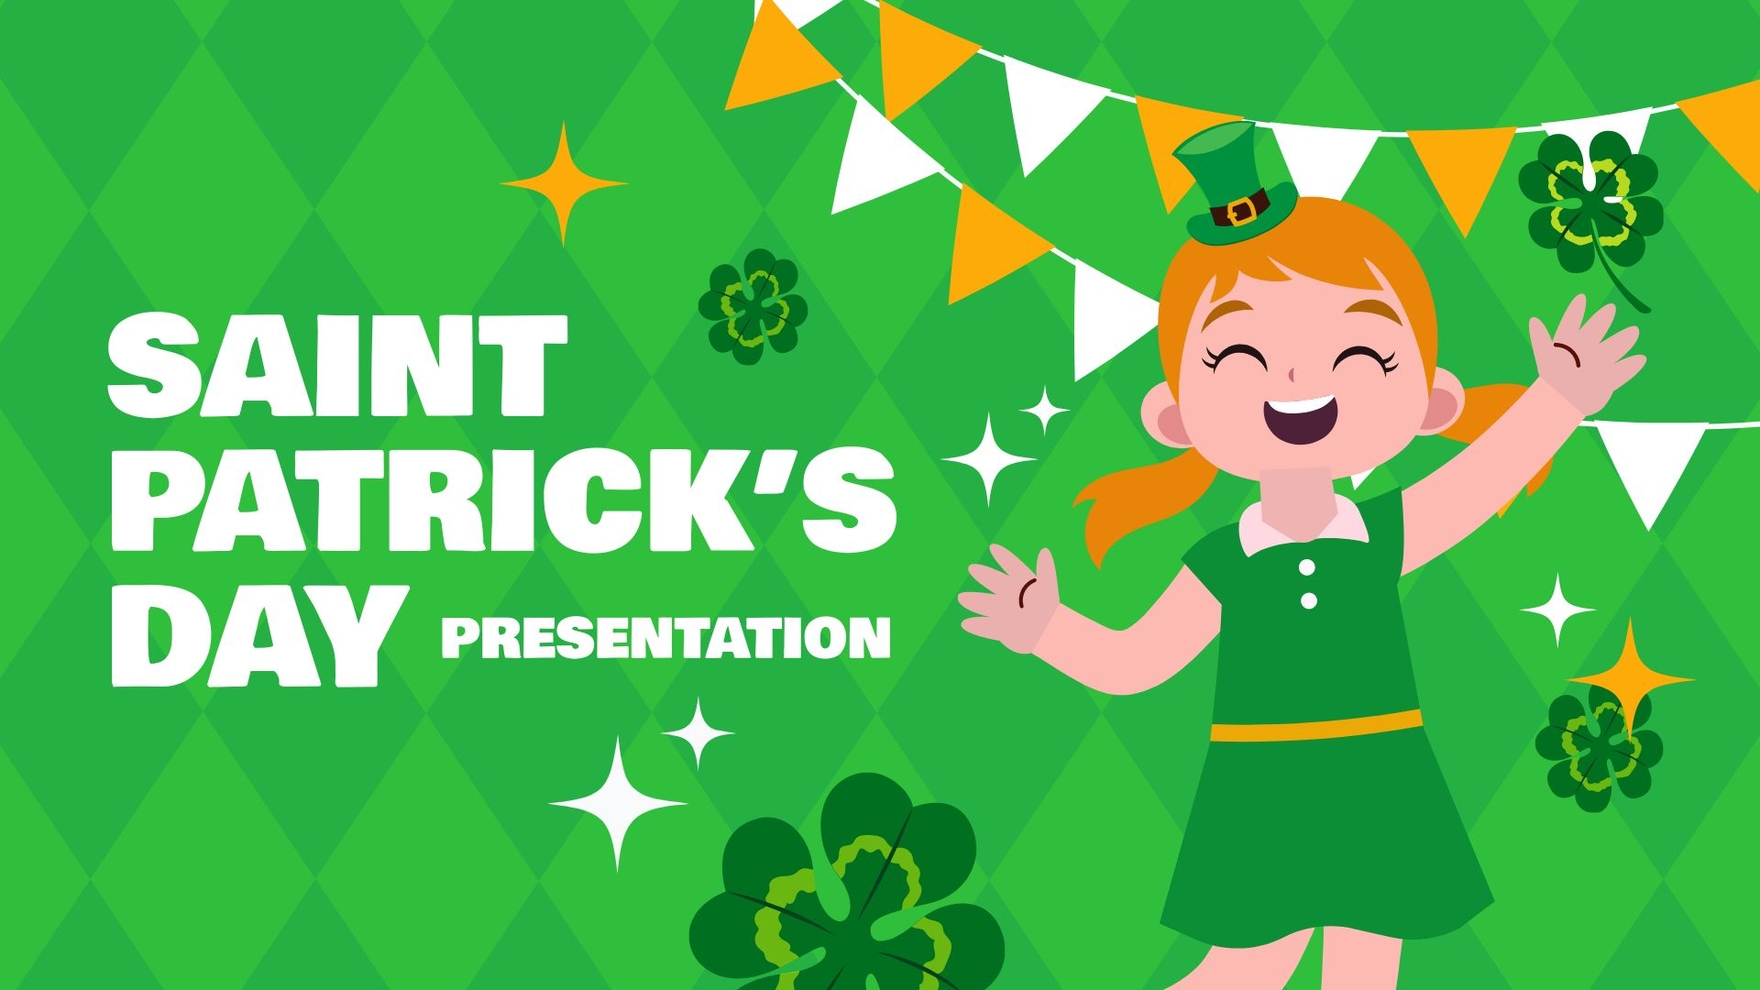 Fun St. Patrick's Day Presentation